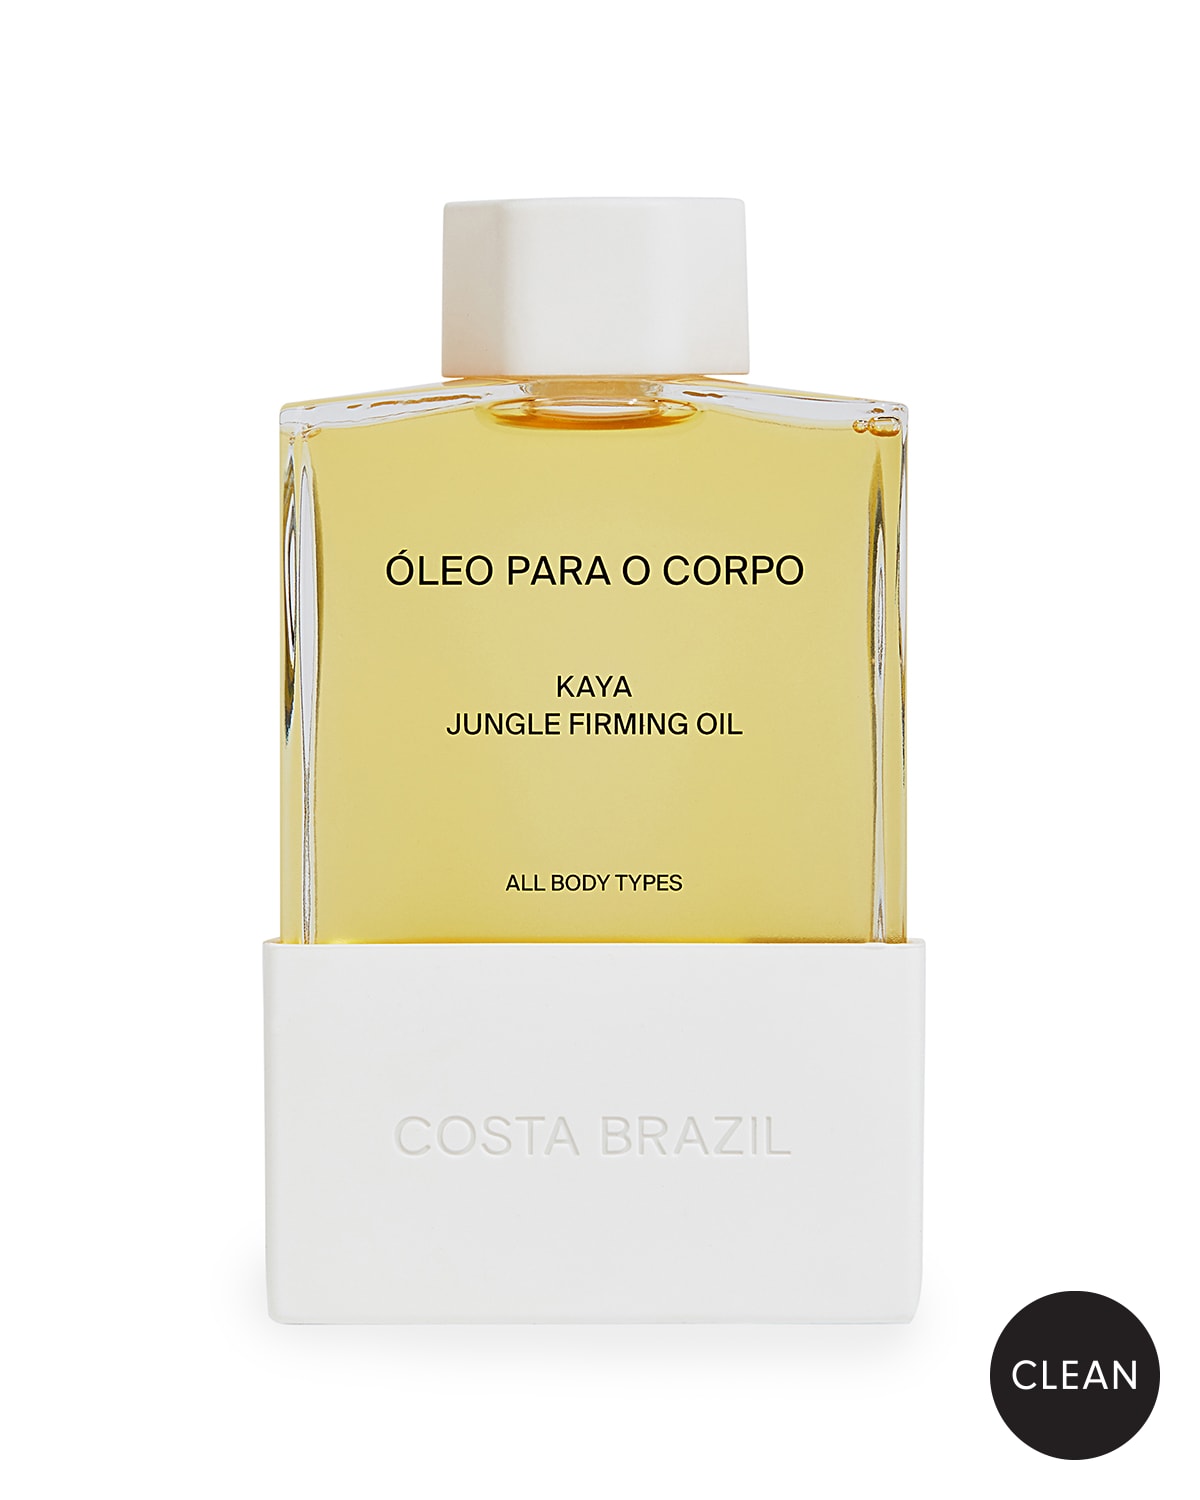 Costa Brazil Oleo Para o Corpo - Kaya Jungle Firming Oil, 3.4 oz./ 100 mL